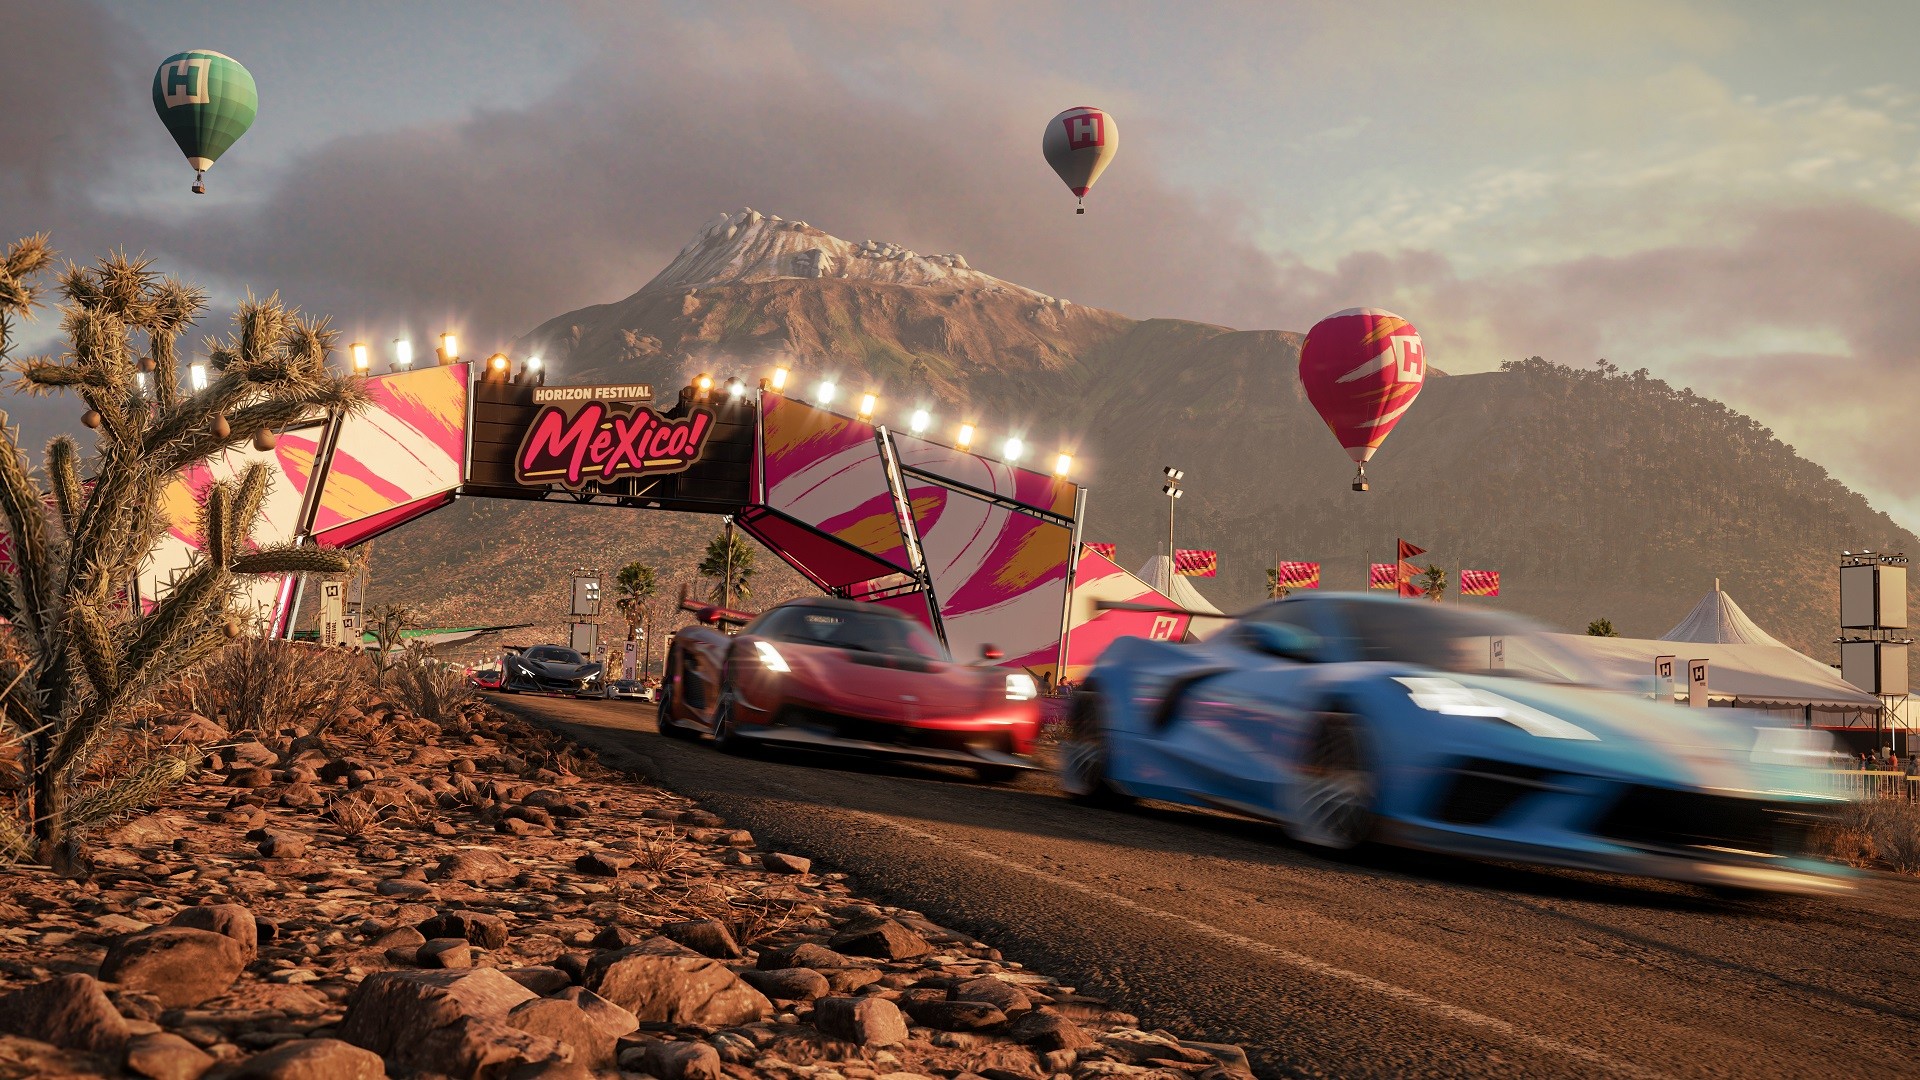 Forza Motorsport And Forza Horizon 5 - Premium Add-Ons Bundle DLC EU XBOX One / Xbox Series X,S CD Key